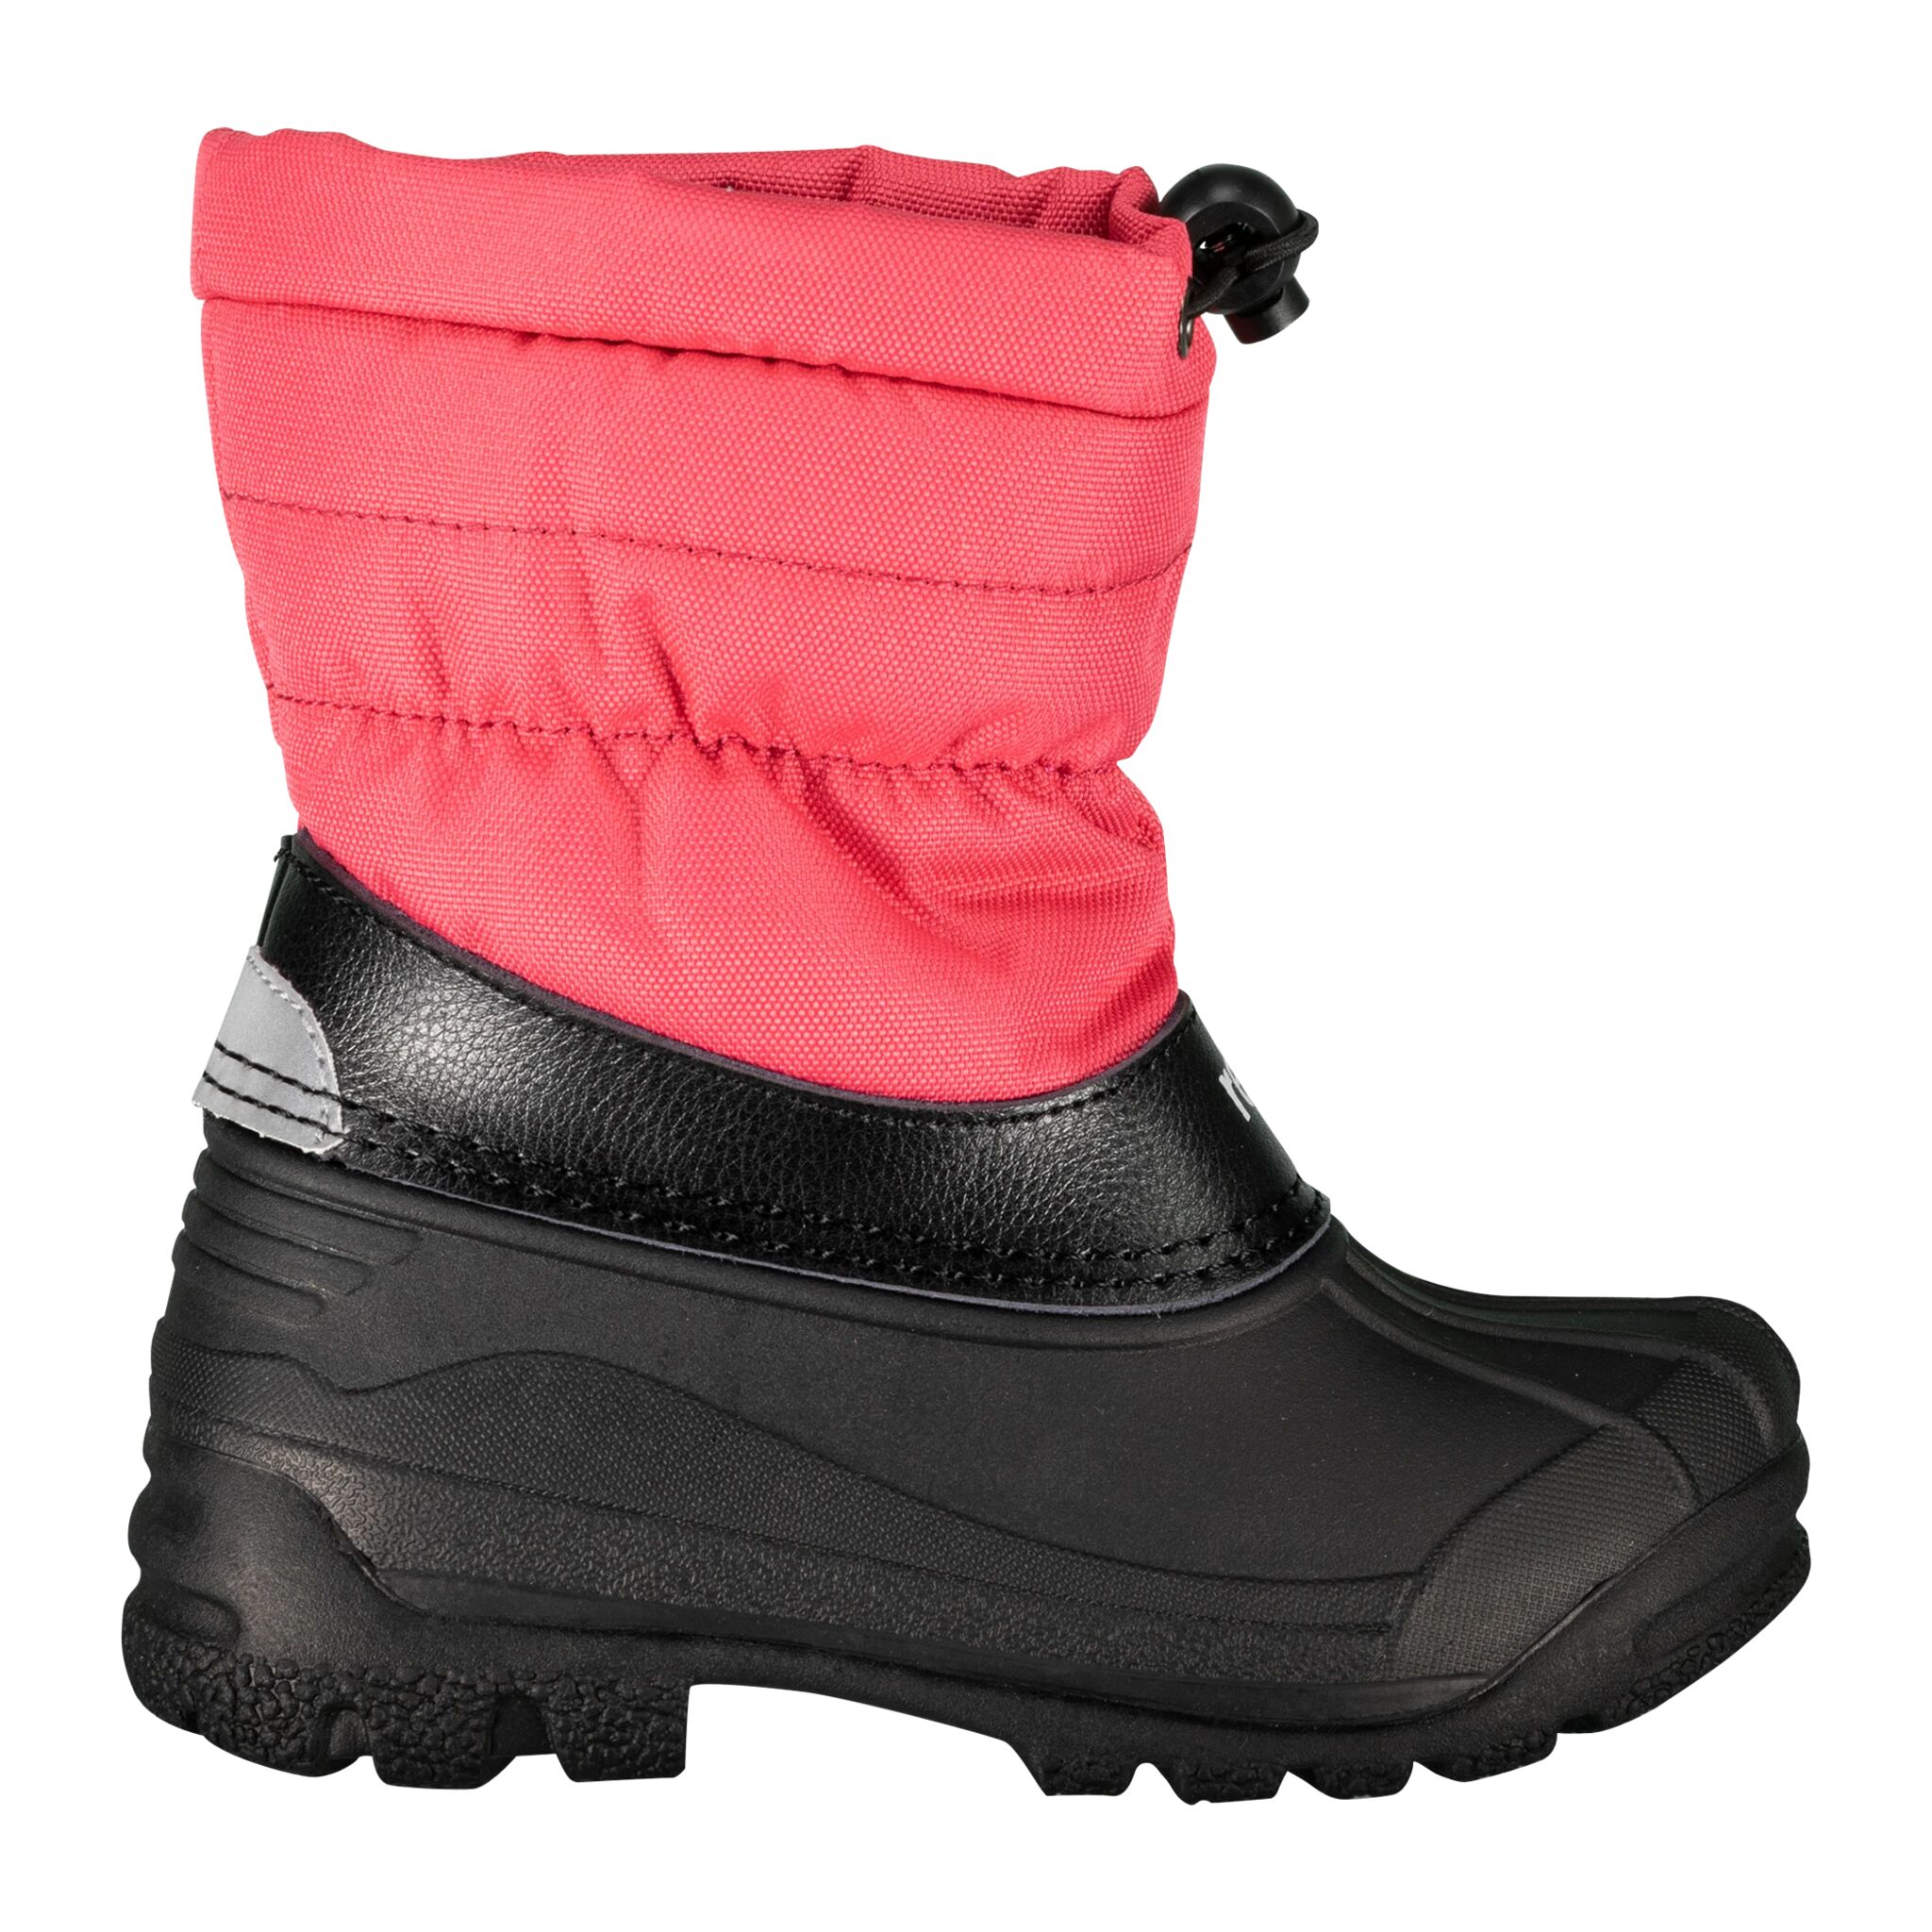 Reima Winter boots Nefar, vintersko barn 32 Azalea Pink